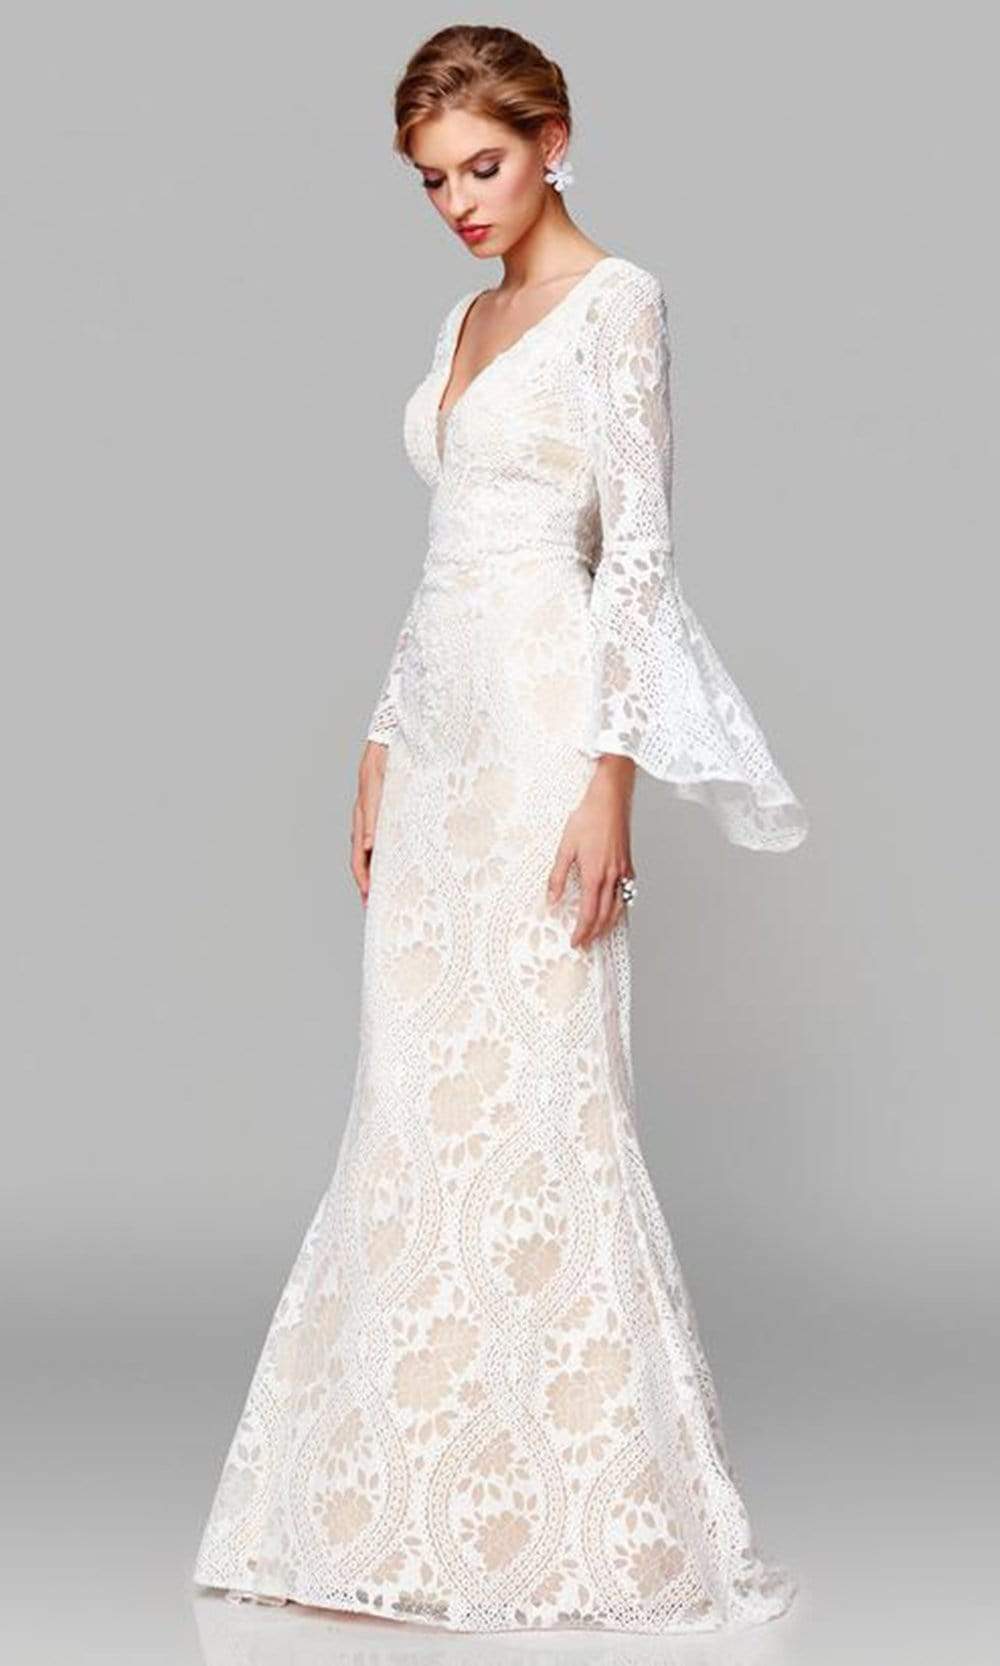 Clarisse - 600101 Lace Long Bell Sleeve Trumpet Dress Wedding Dresses